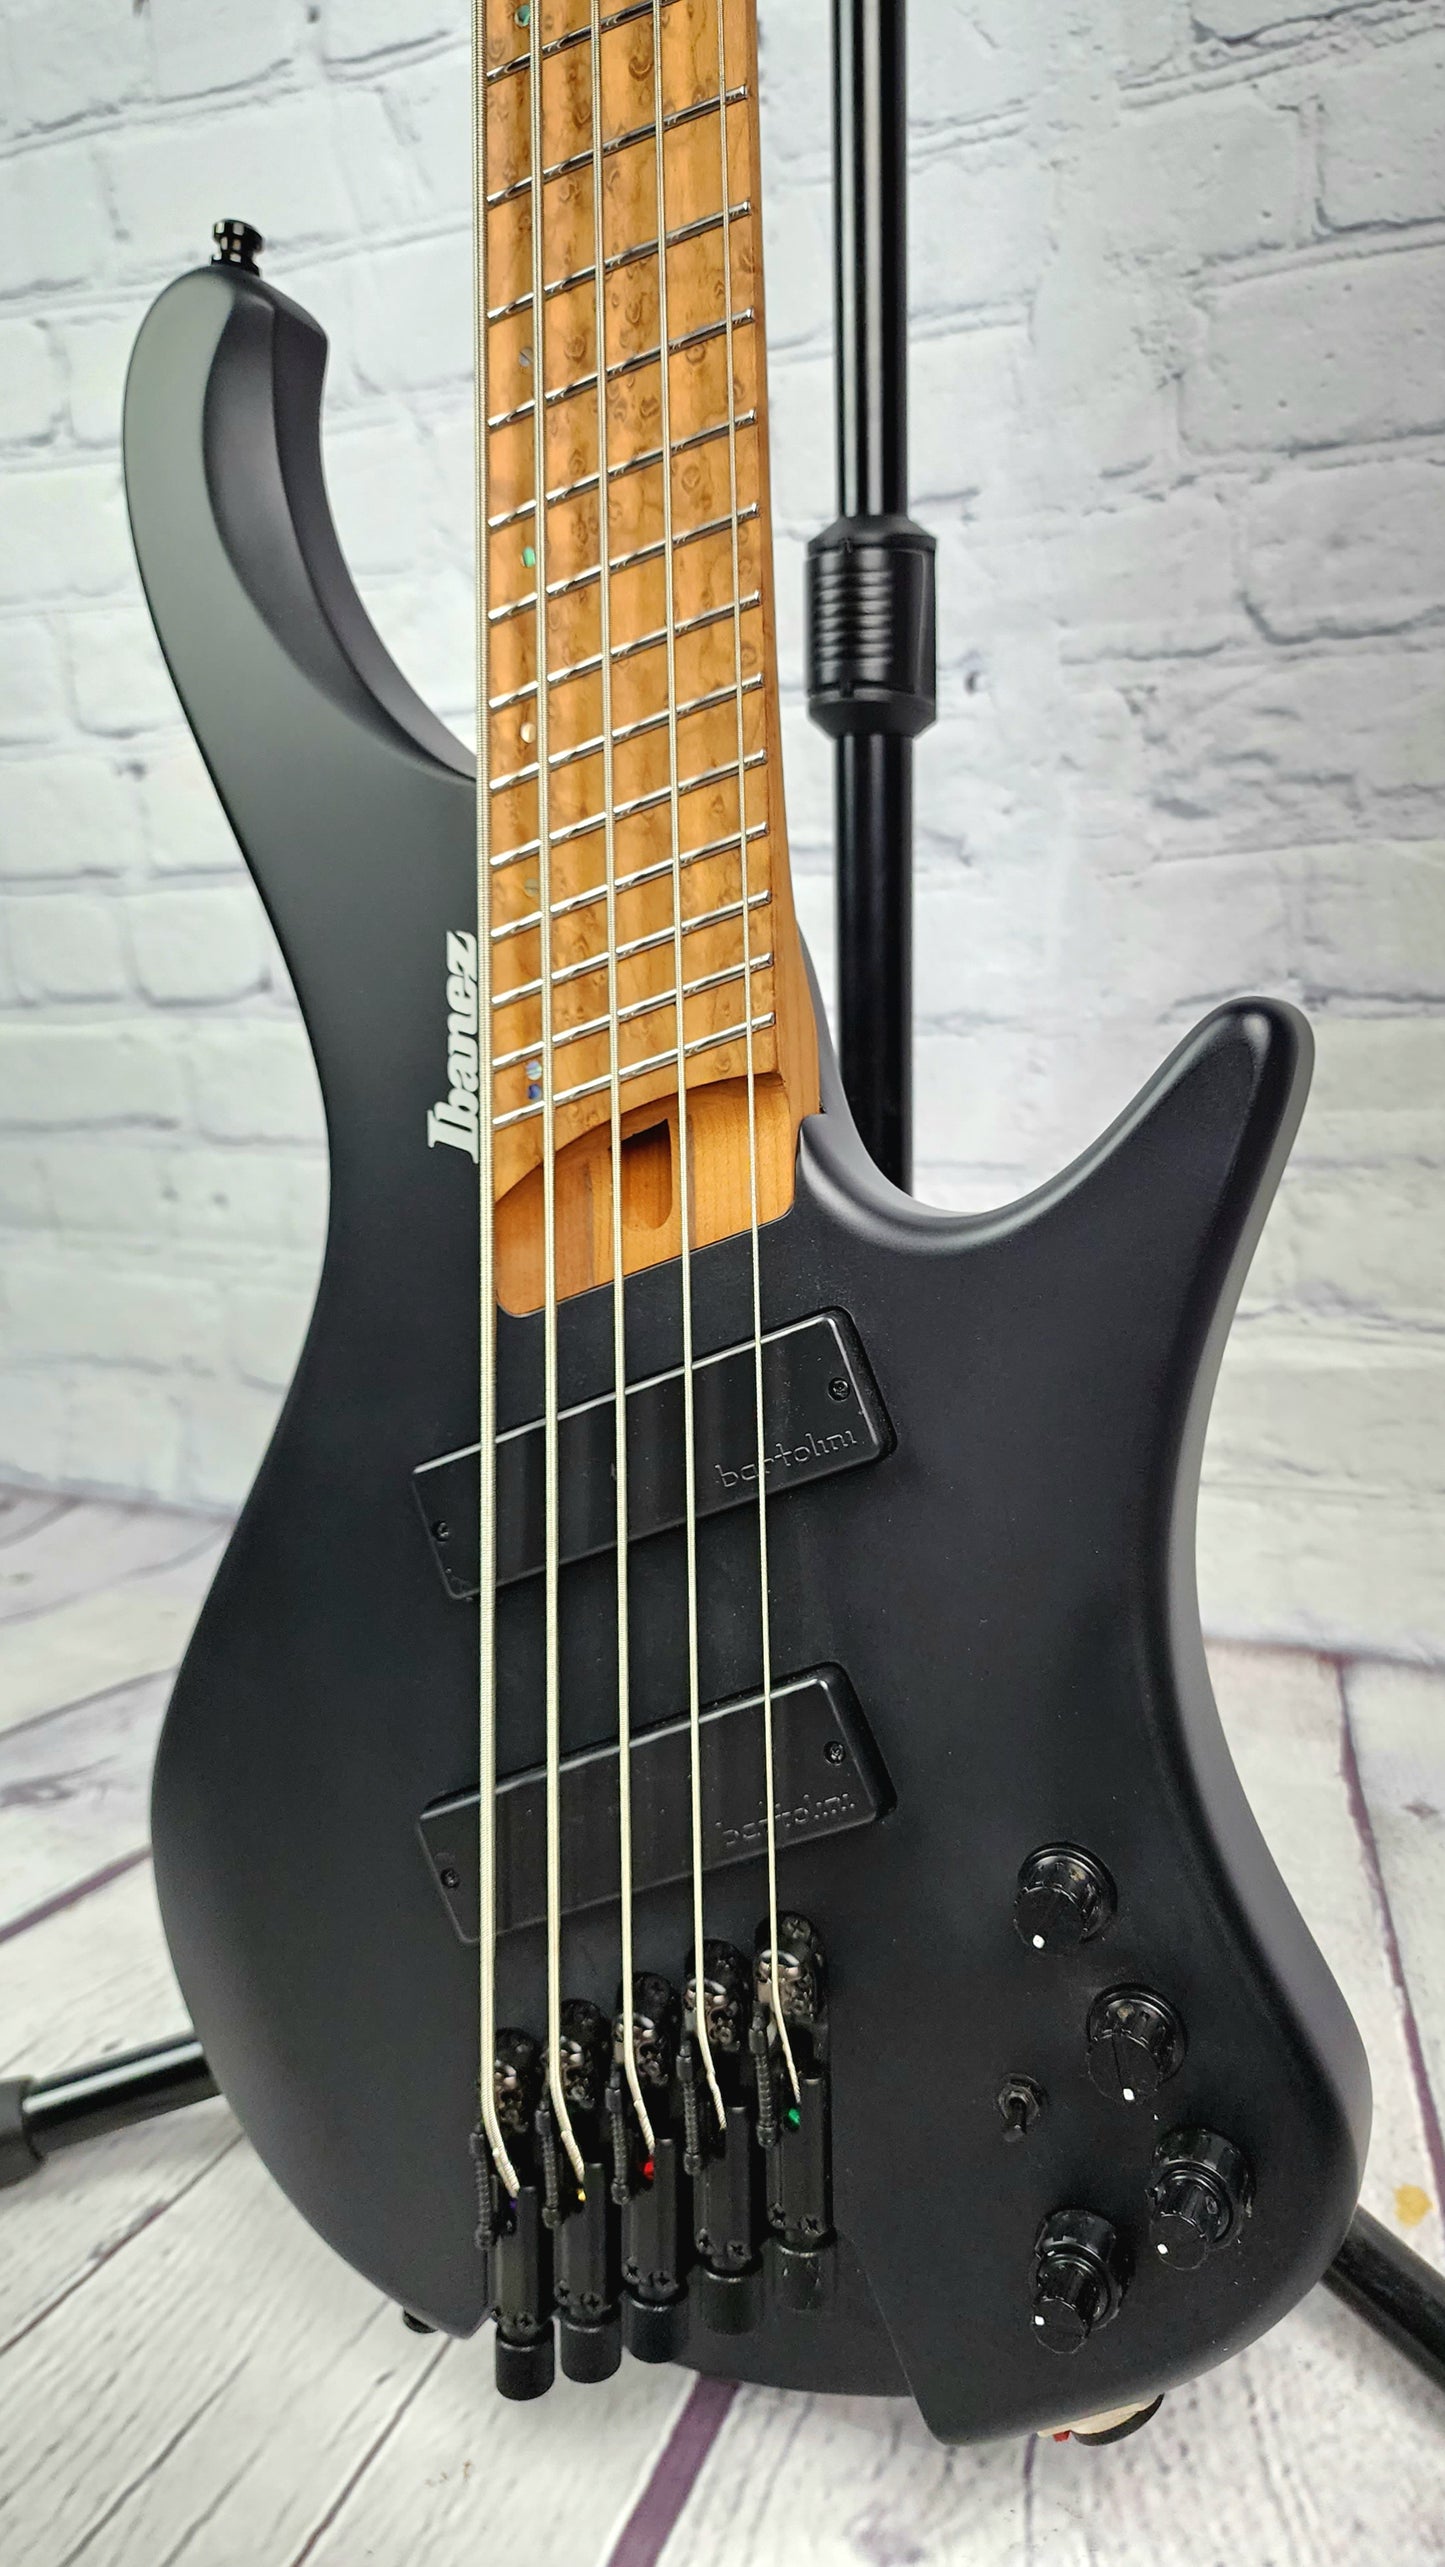 Ibanez EHB1005MS BKF Multiscale 5 String Bass Guitar Flat Black